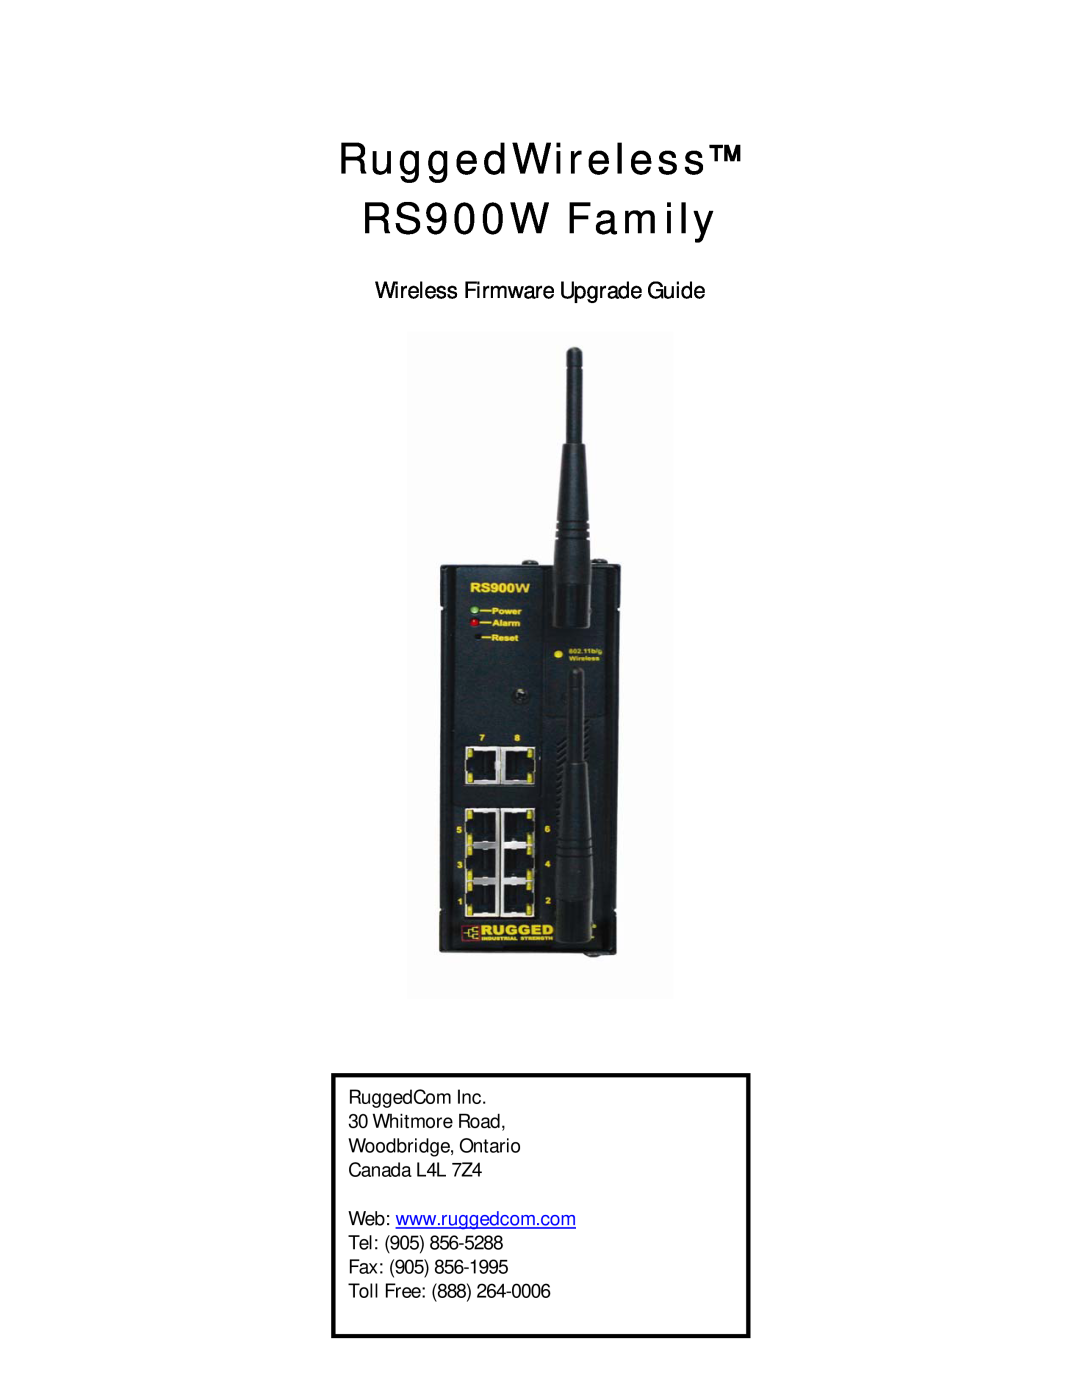 RuggedCom RS900W manual Wireless Firmware Upgrade Guide, RuggedCom Inc 30 Whitmore Road Woodbridge, Ontario Canada L4L 7Z4 